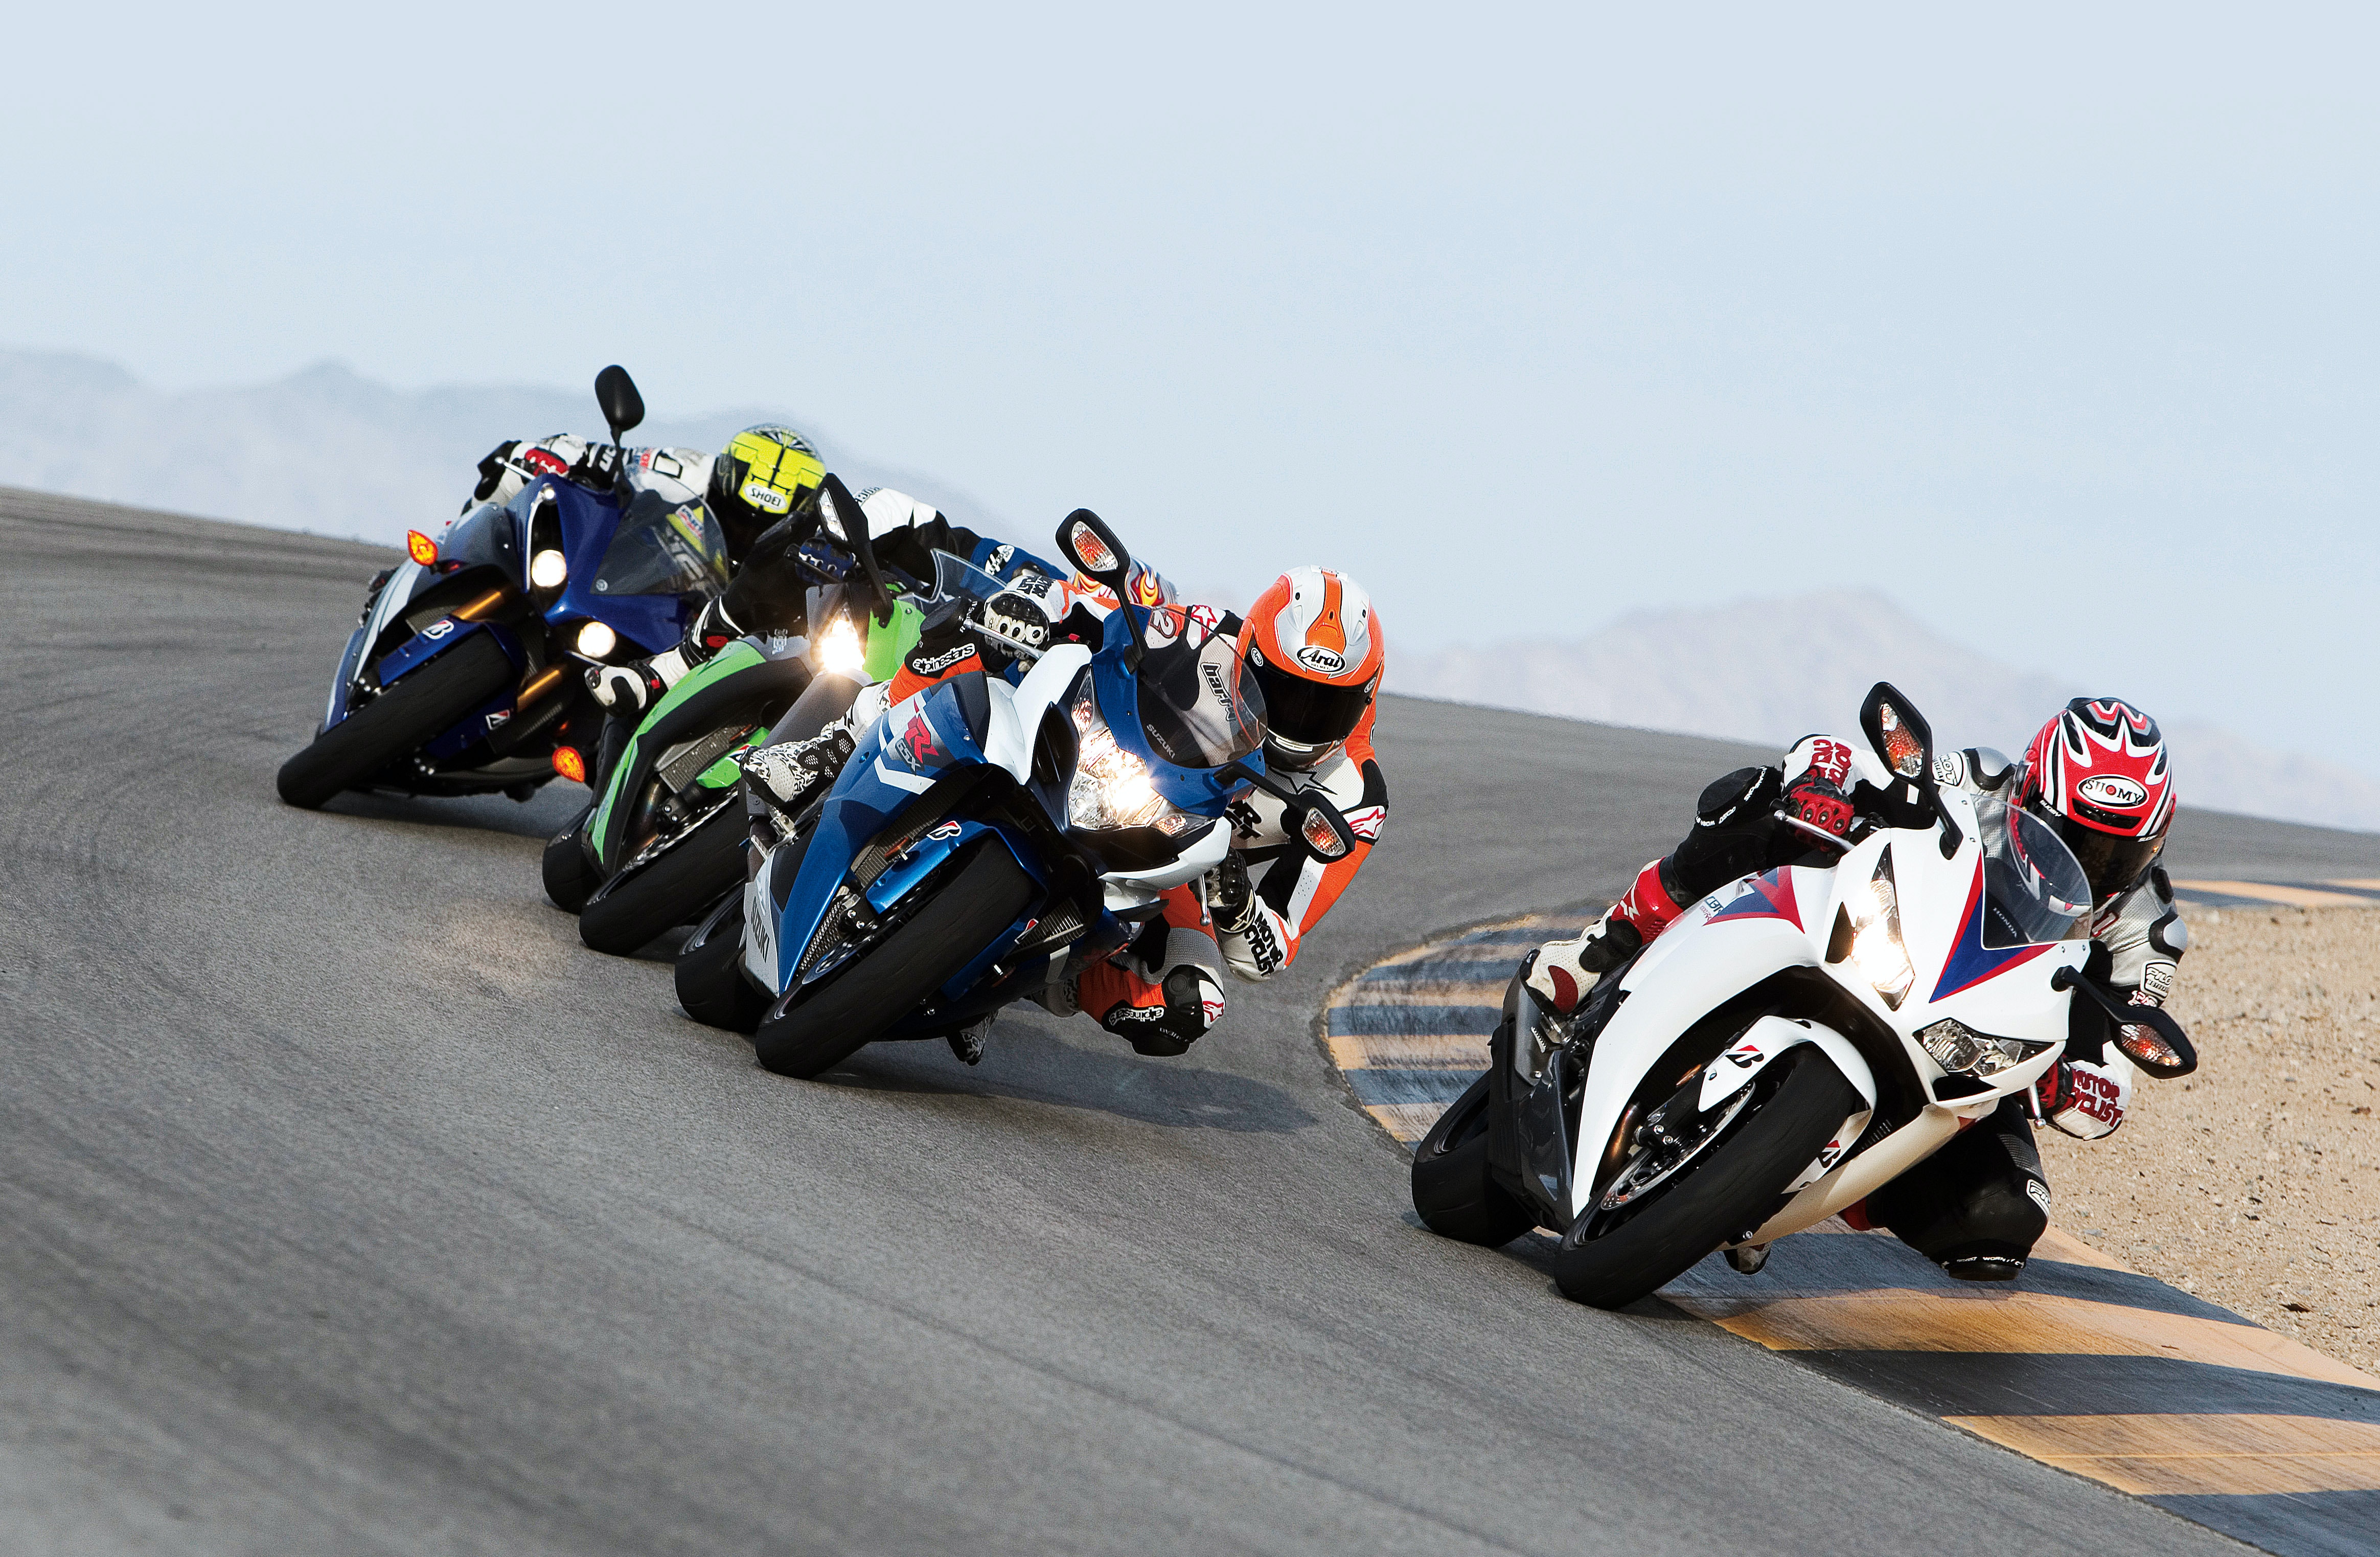 motorcycles racing